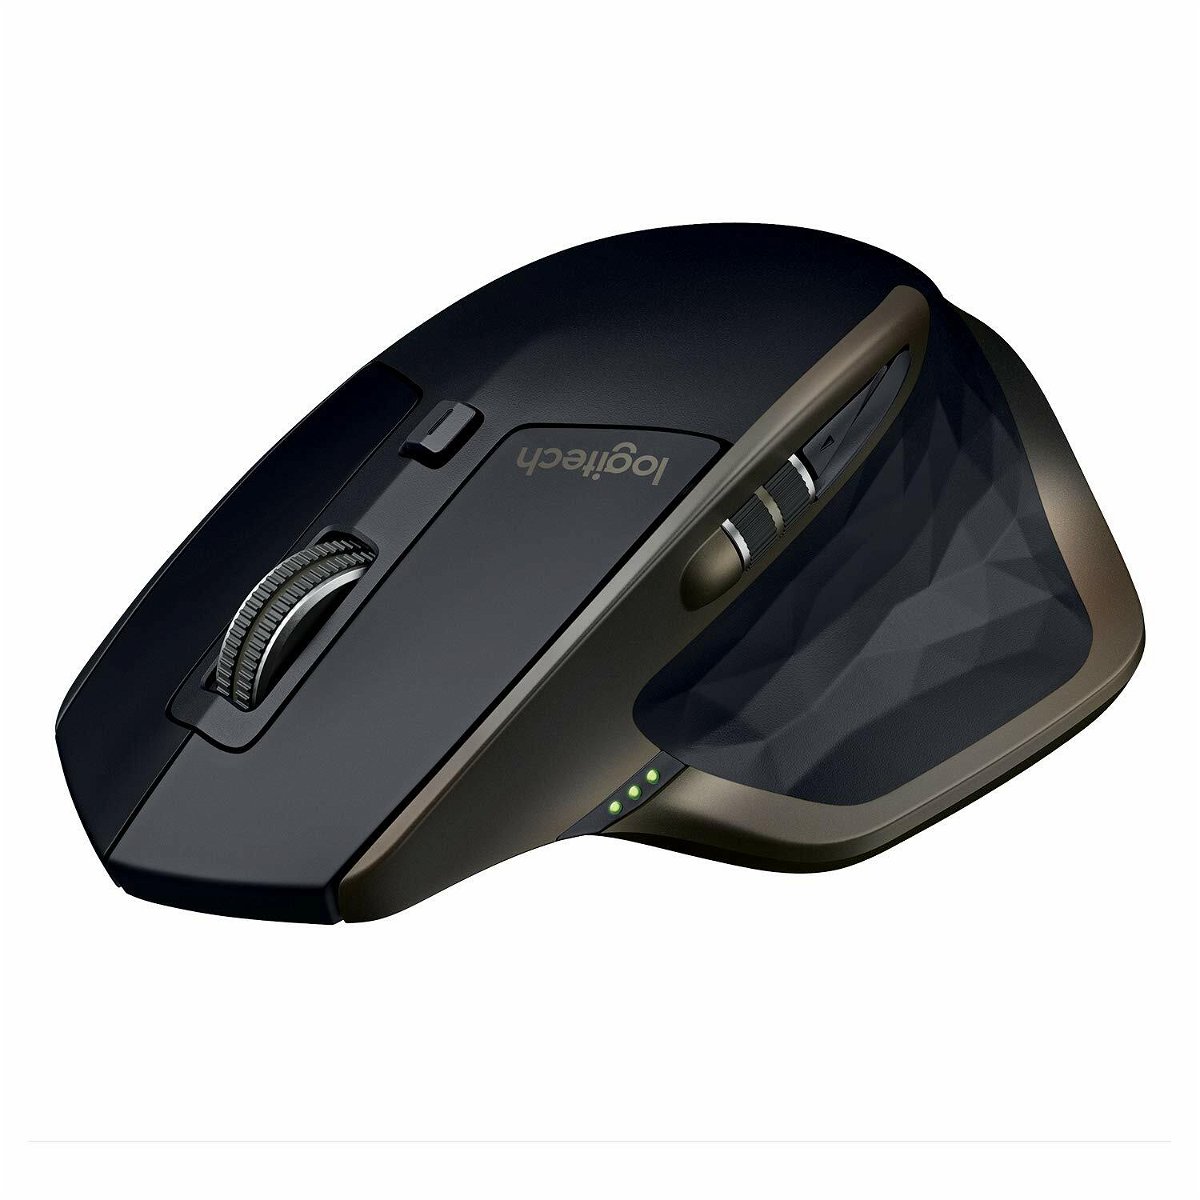 Immagine stampa di Logitech MX Master Mouse Wireless